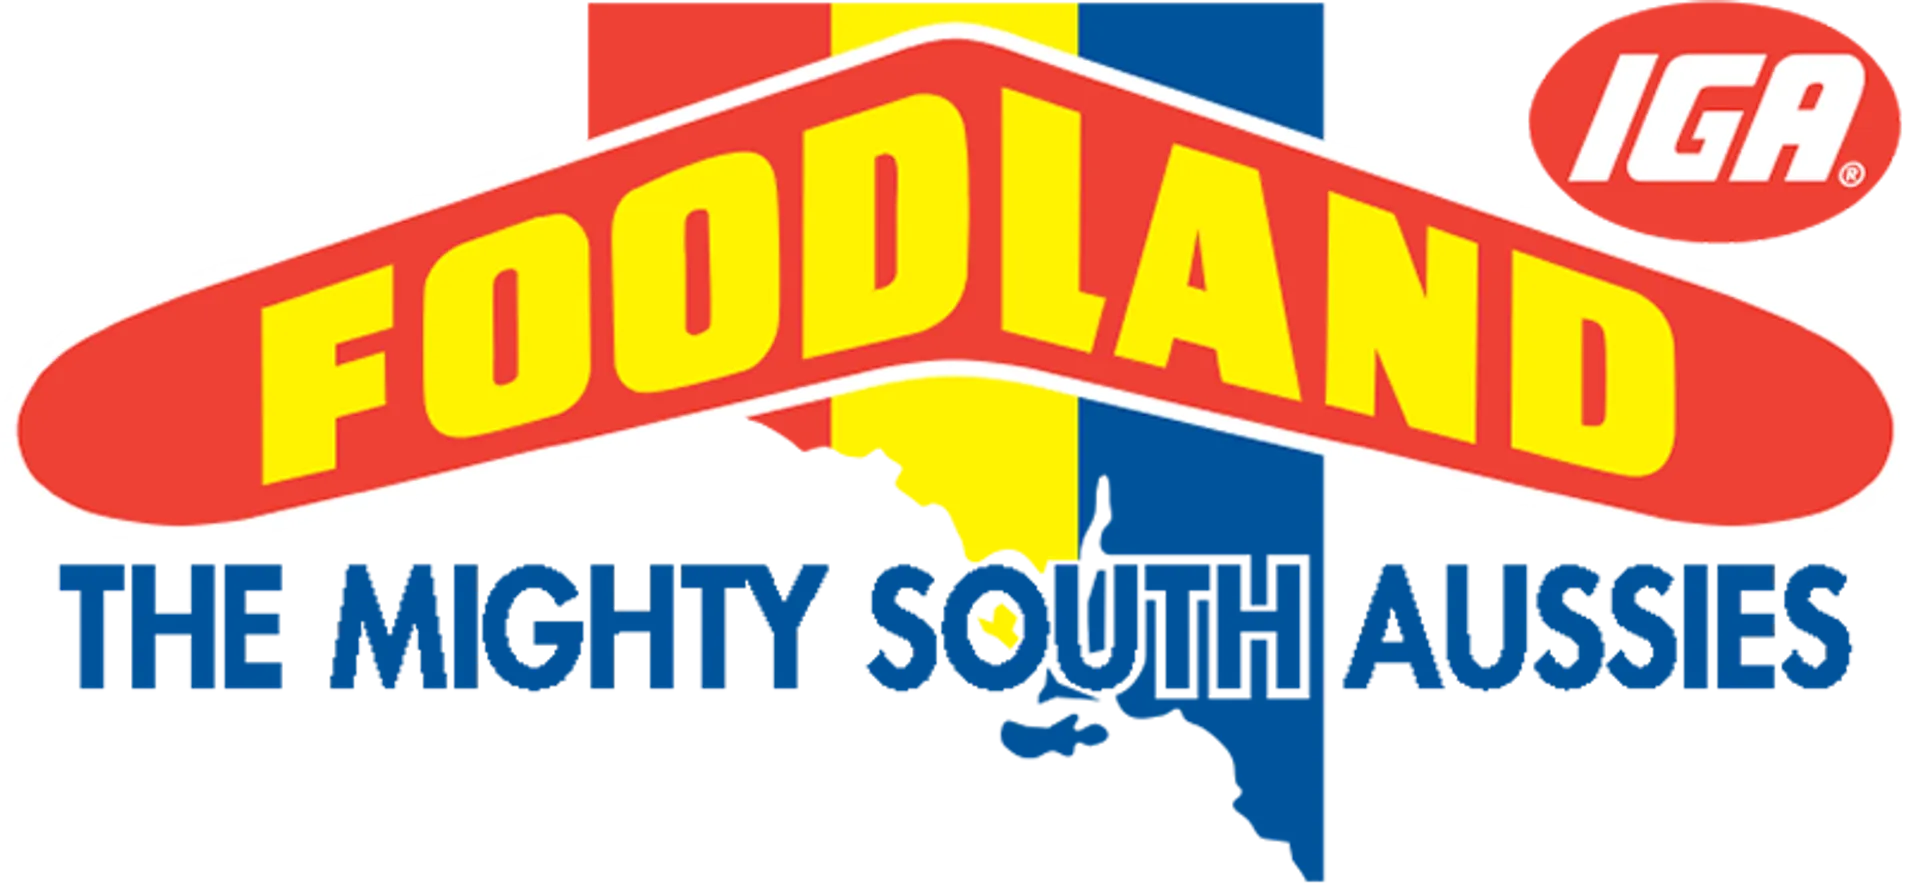 FOODLAND logo of current catalogue